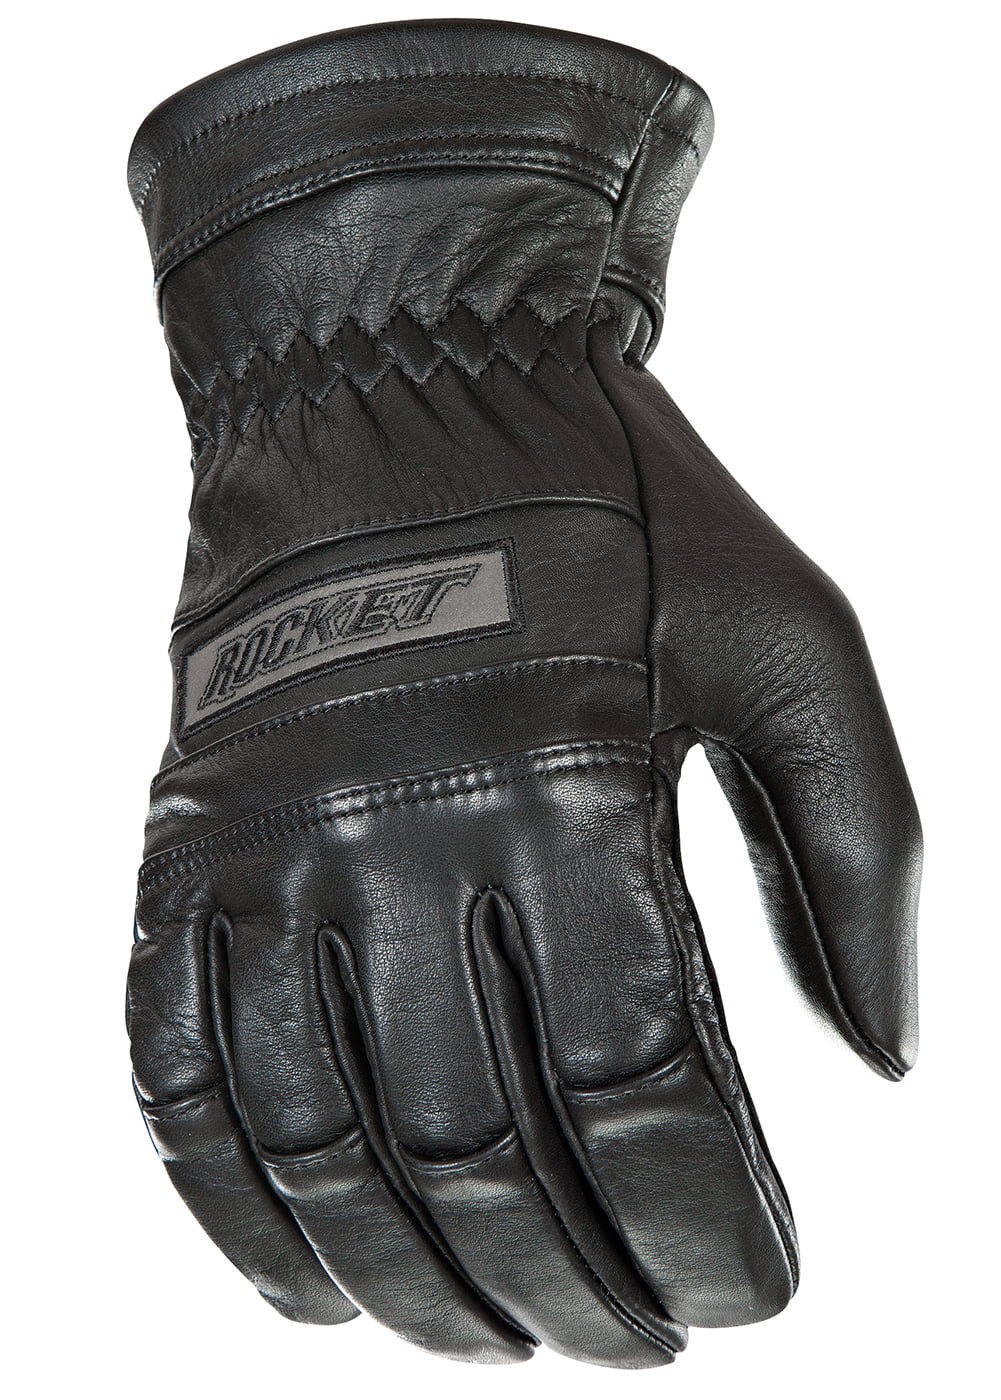 HI-VIZ/Black Joe Rocket Optic Gloves Large 